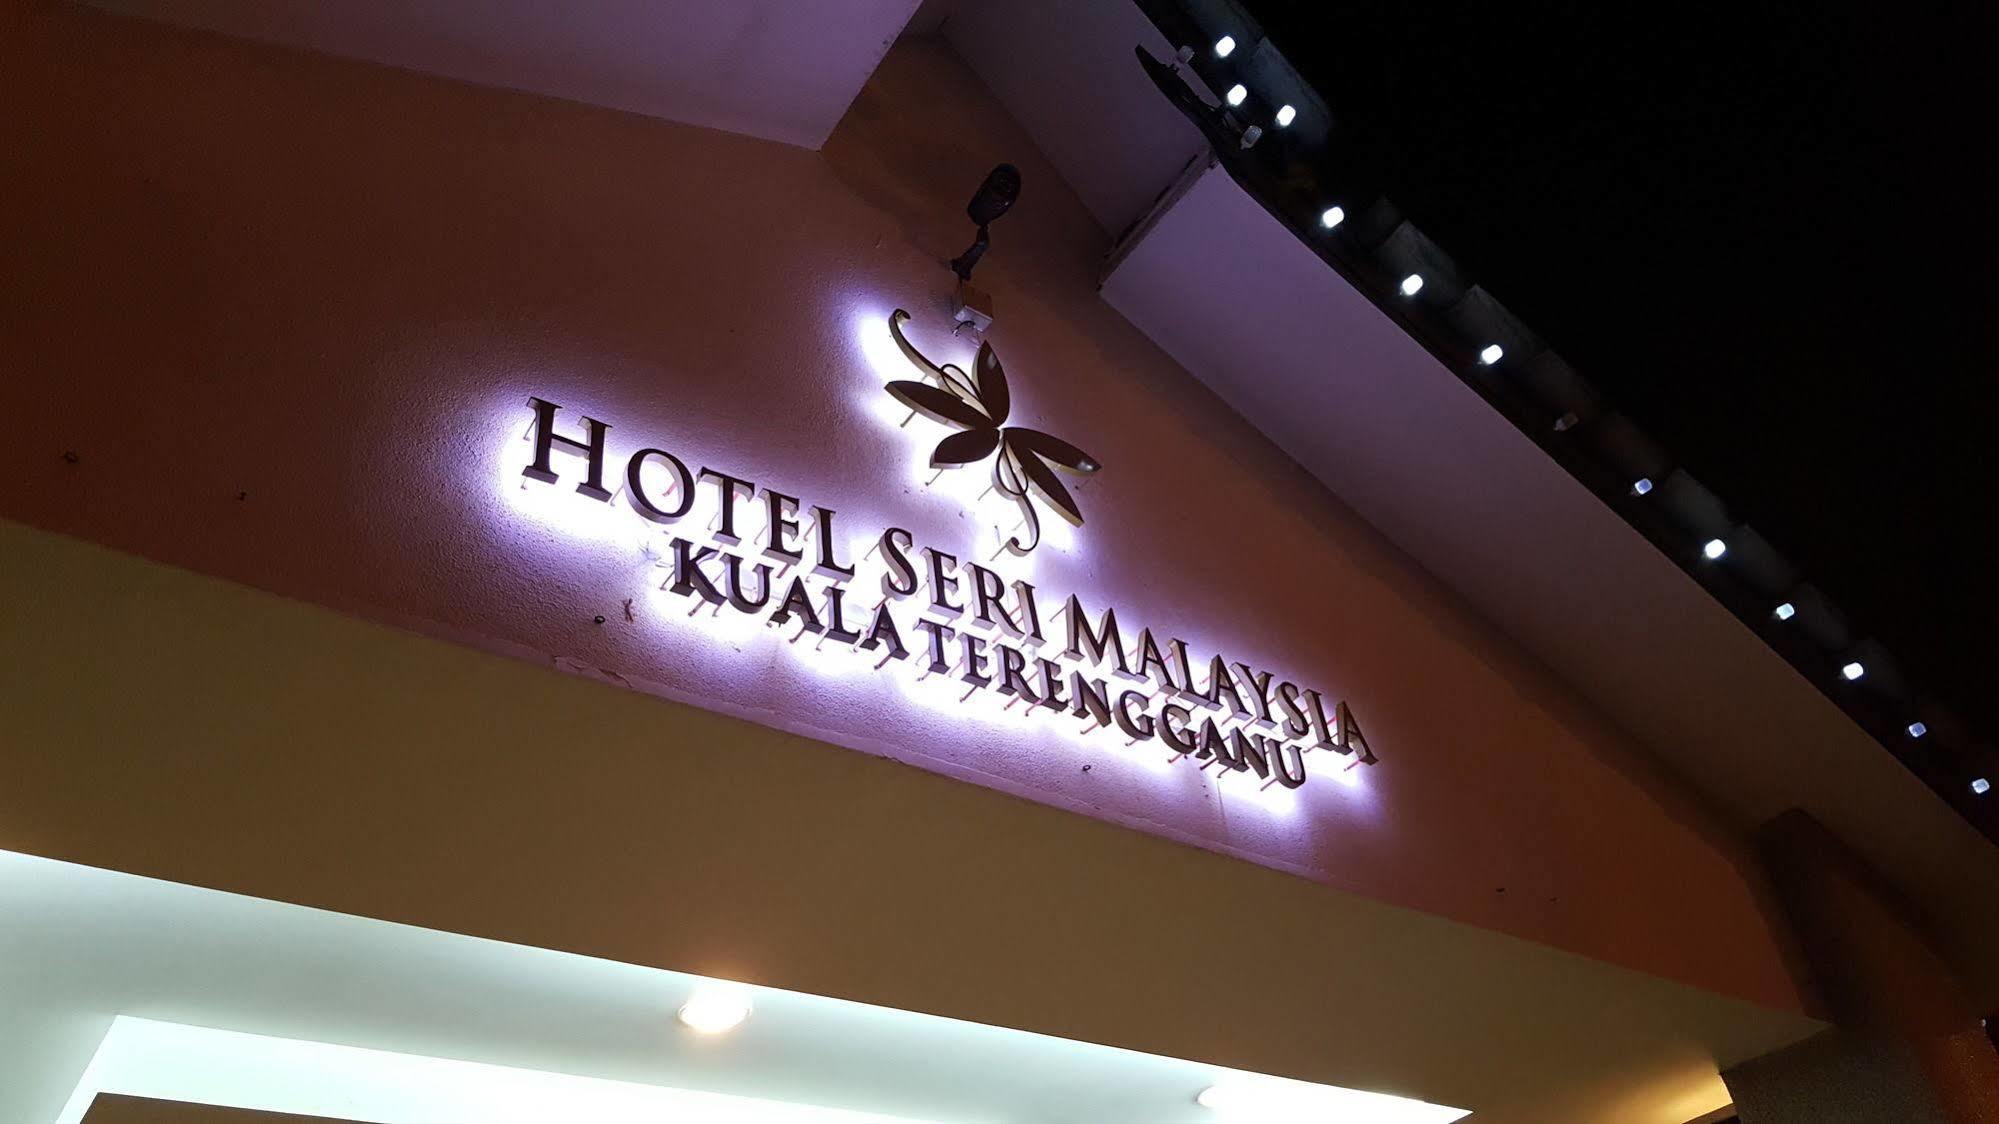 Hotel Seri Malaysia Kuala Terengganu Bagian luar foto